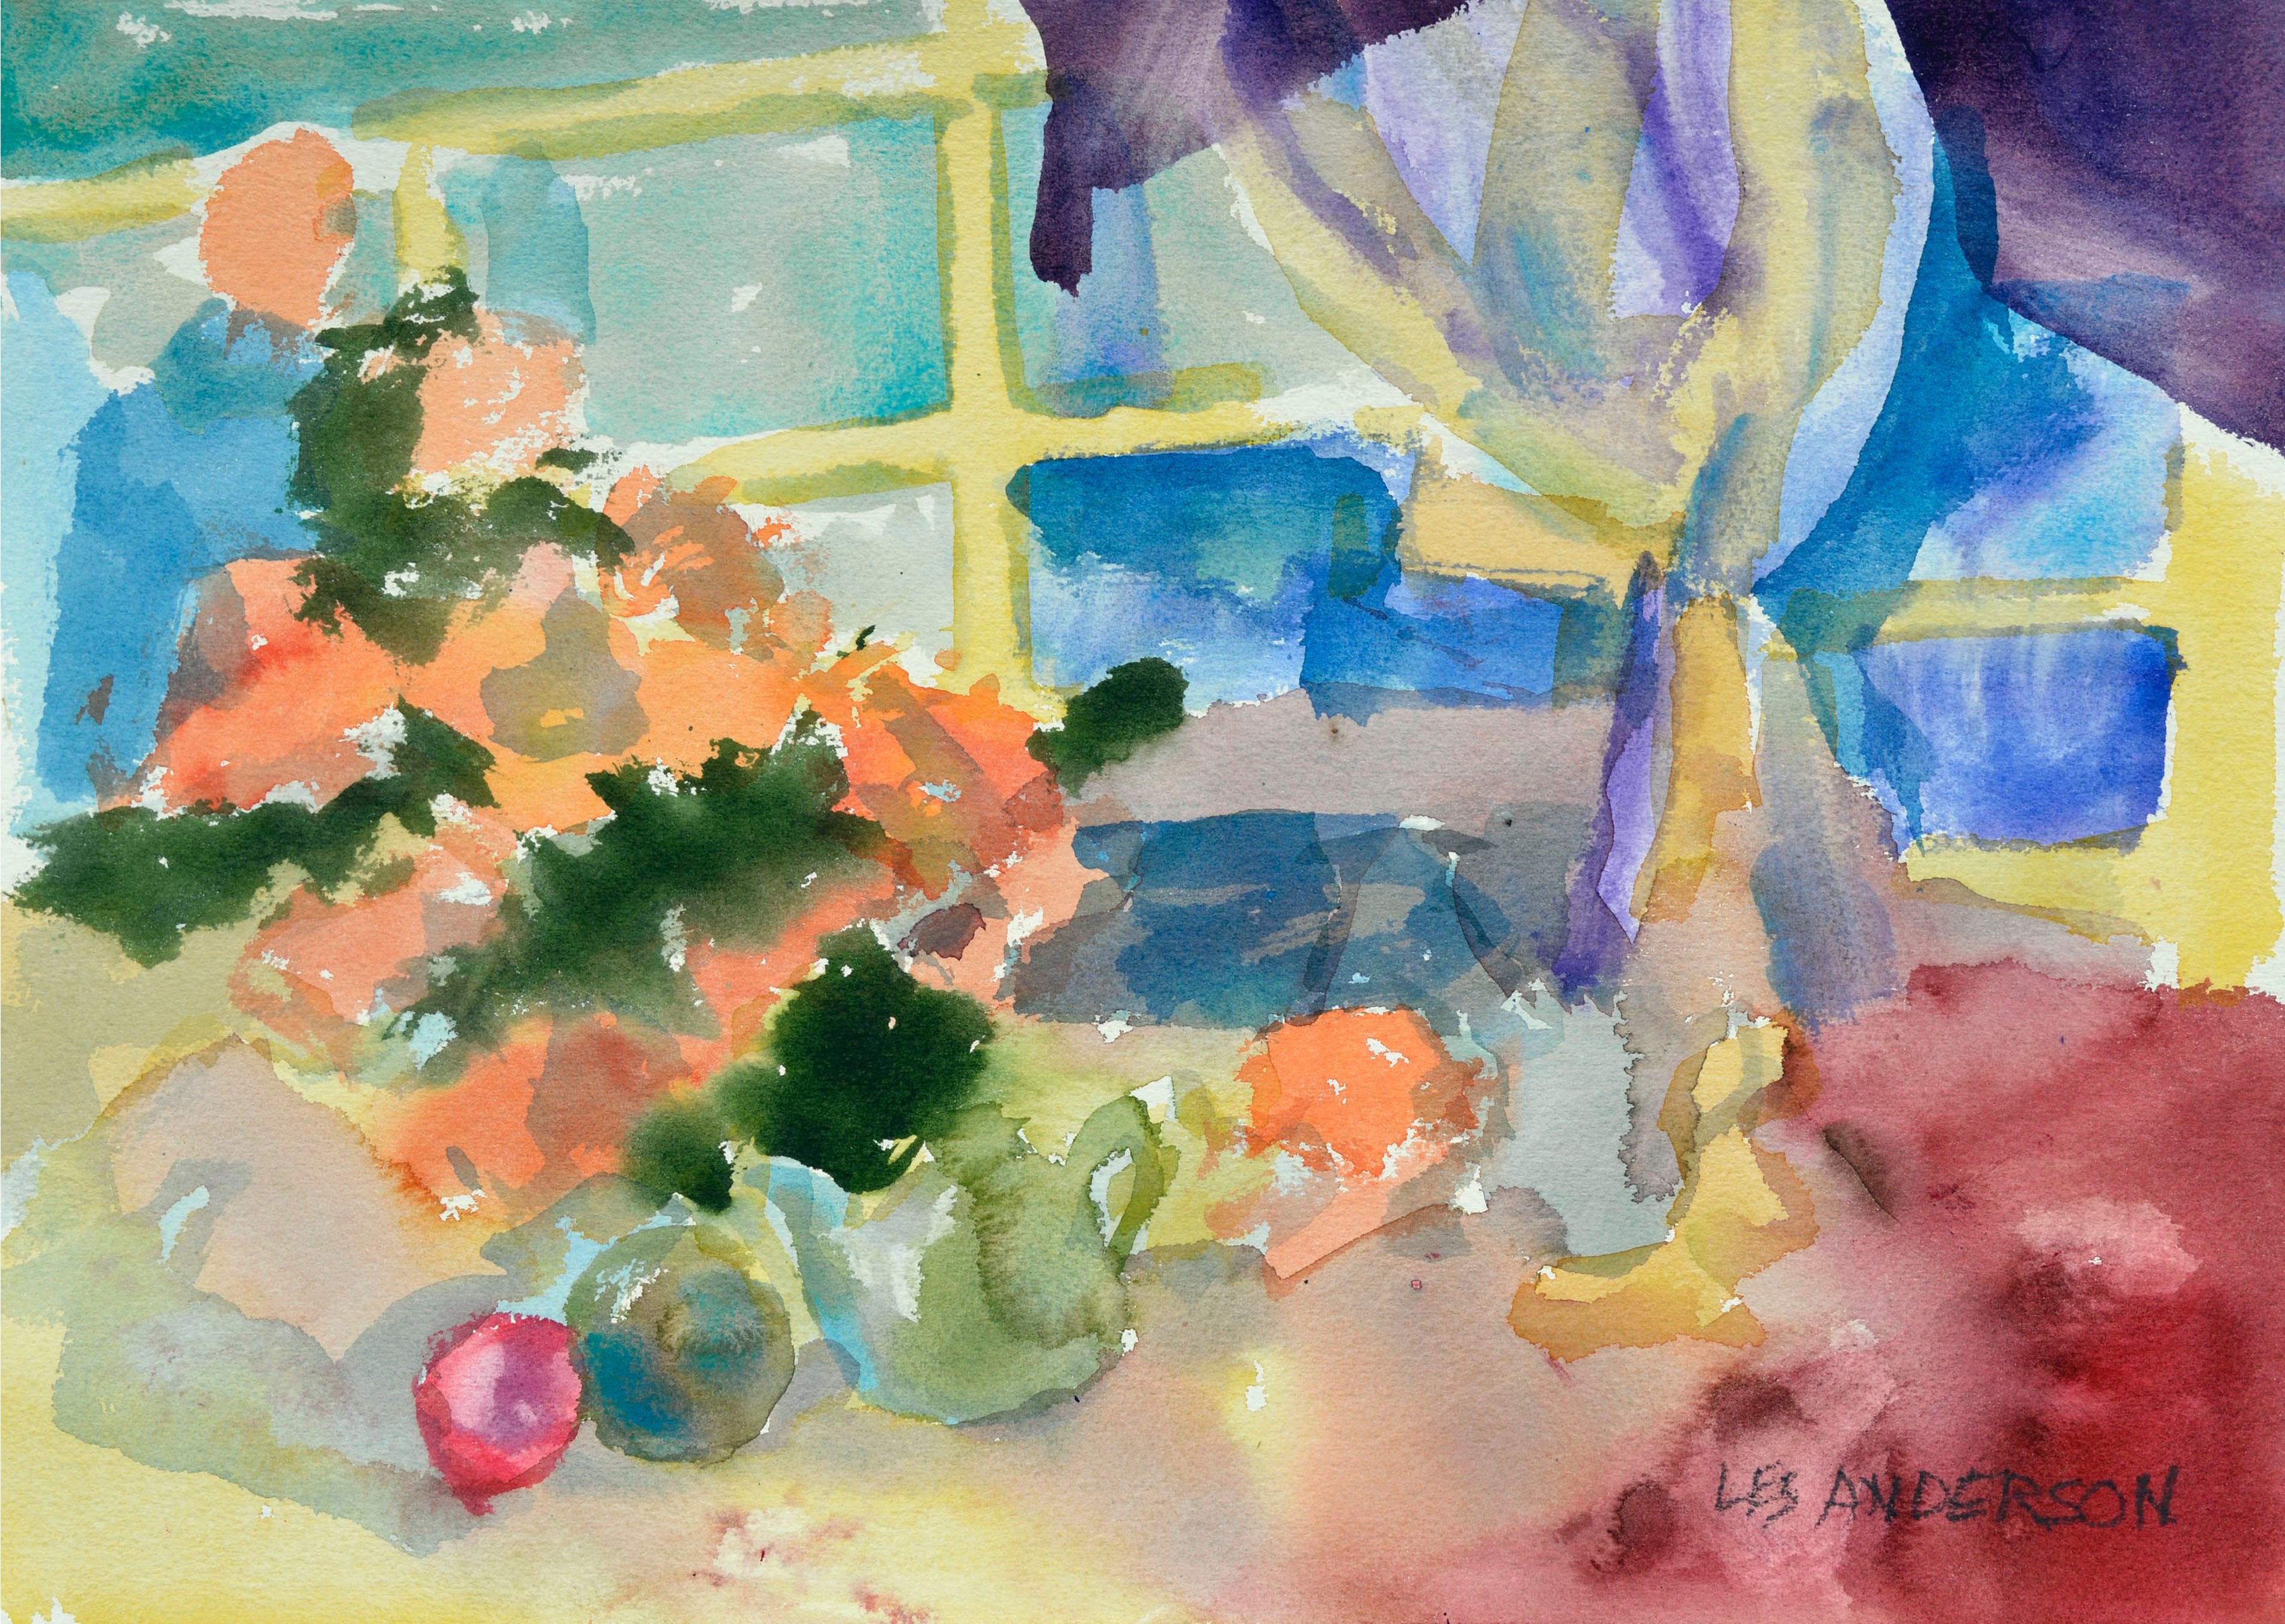 Les Anderson Interior Art - Colorful Watercolor Still-Life 